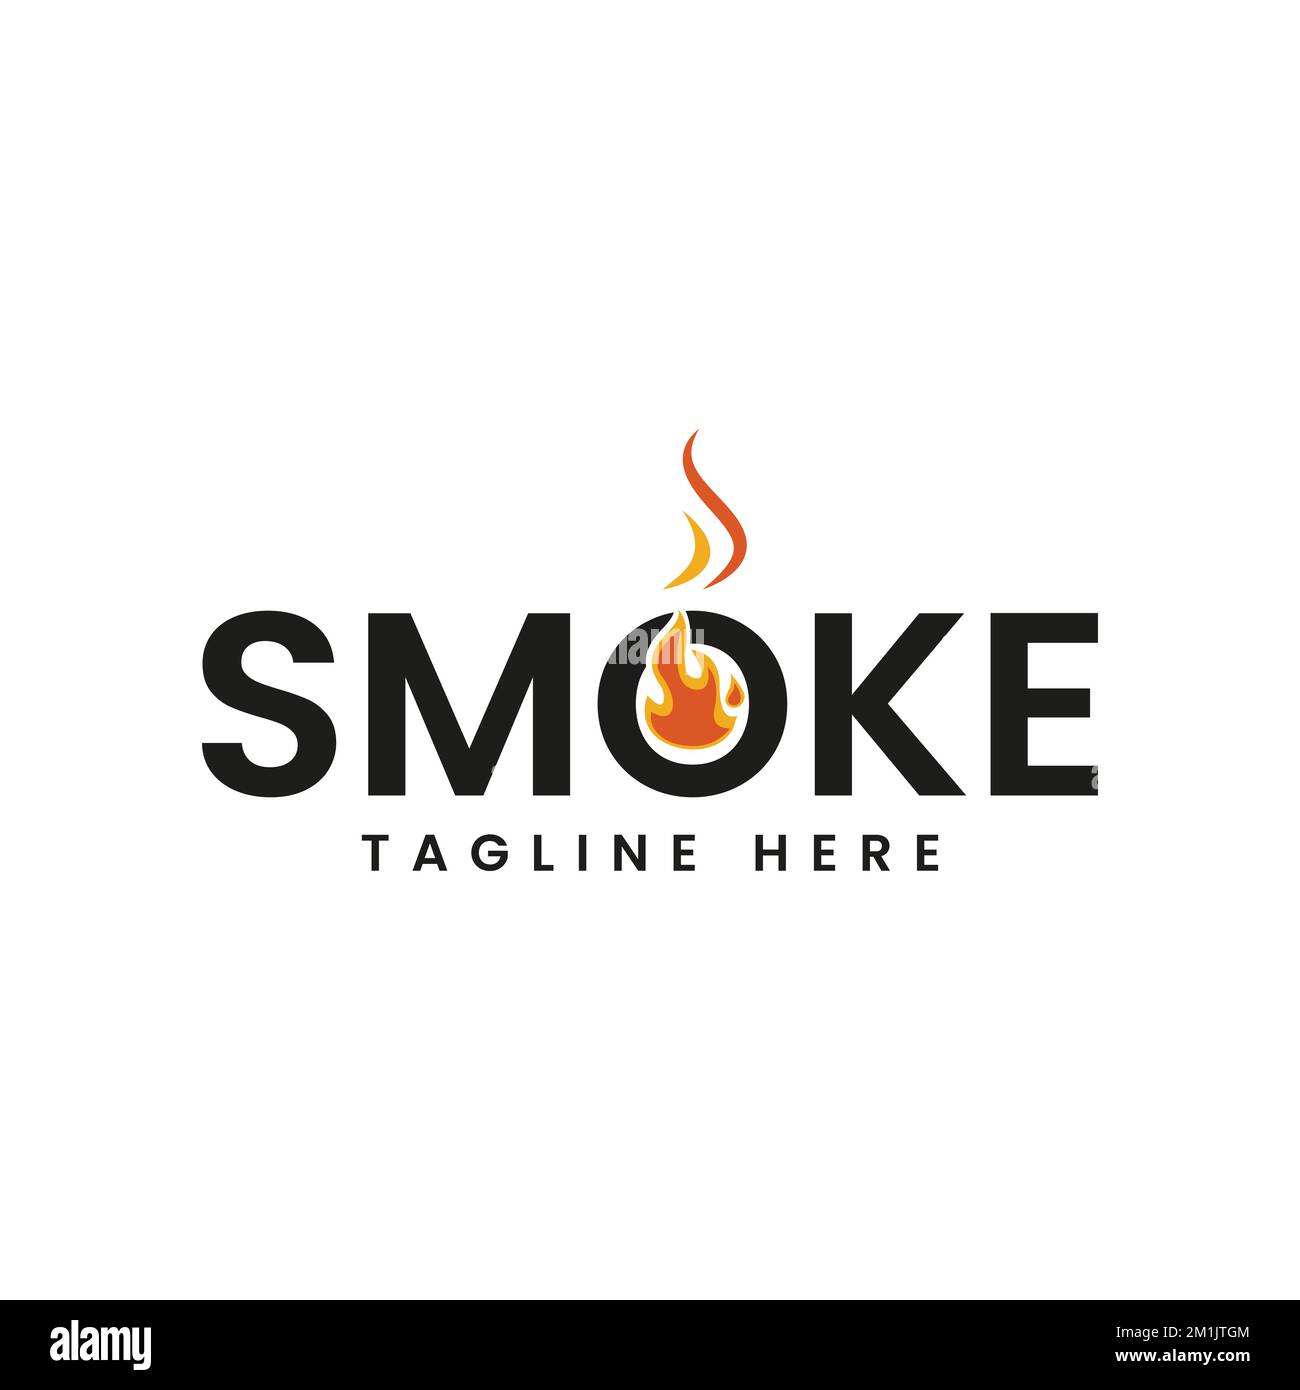 Smoke fire logo design inspiration, watermark logo on white background,symbol,design vector template Stock Vector